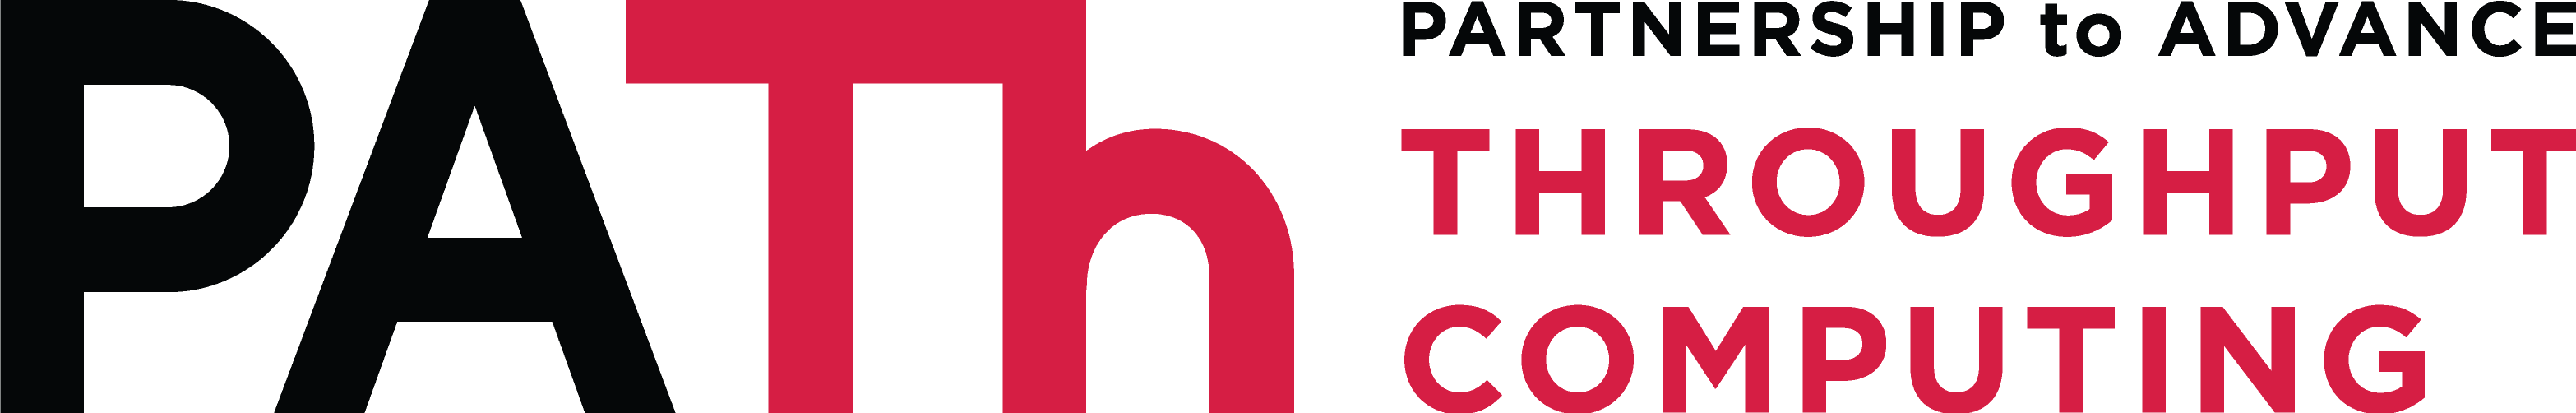 PATh Logo